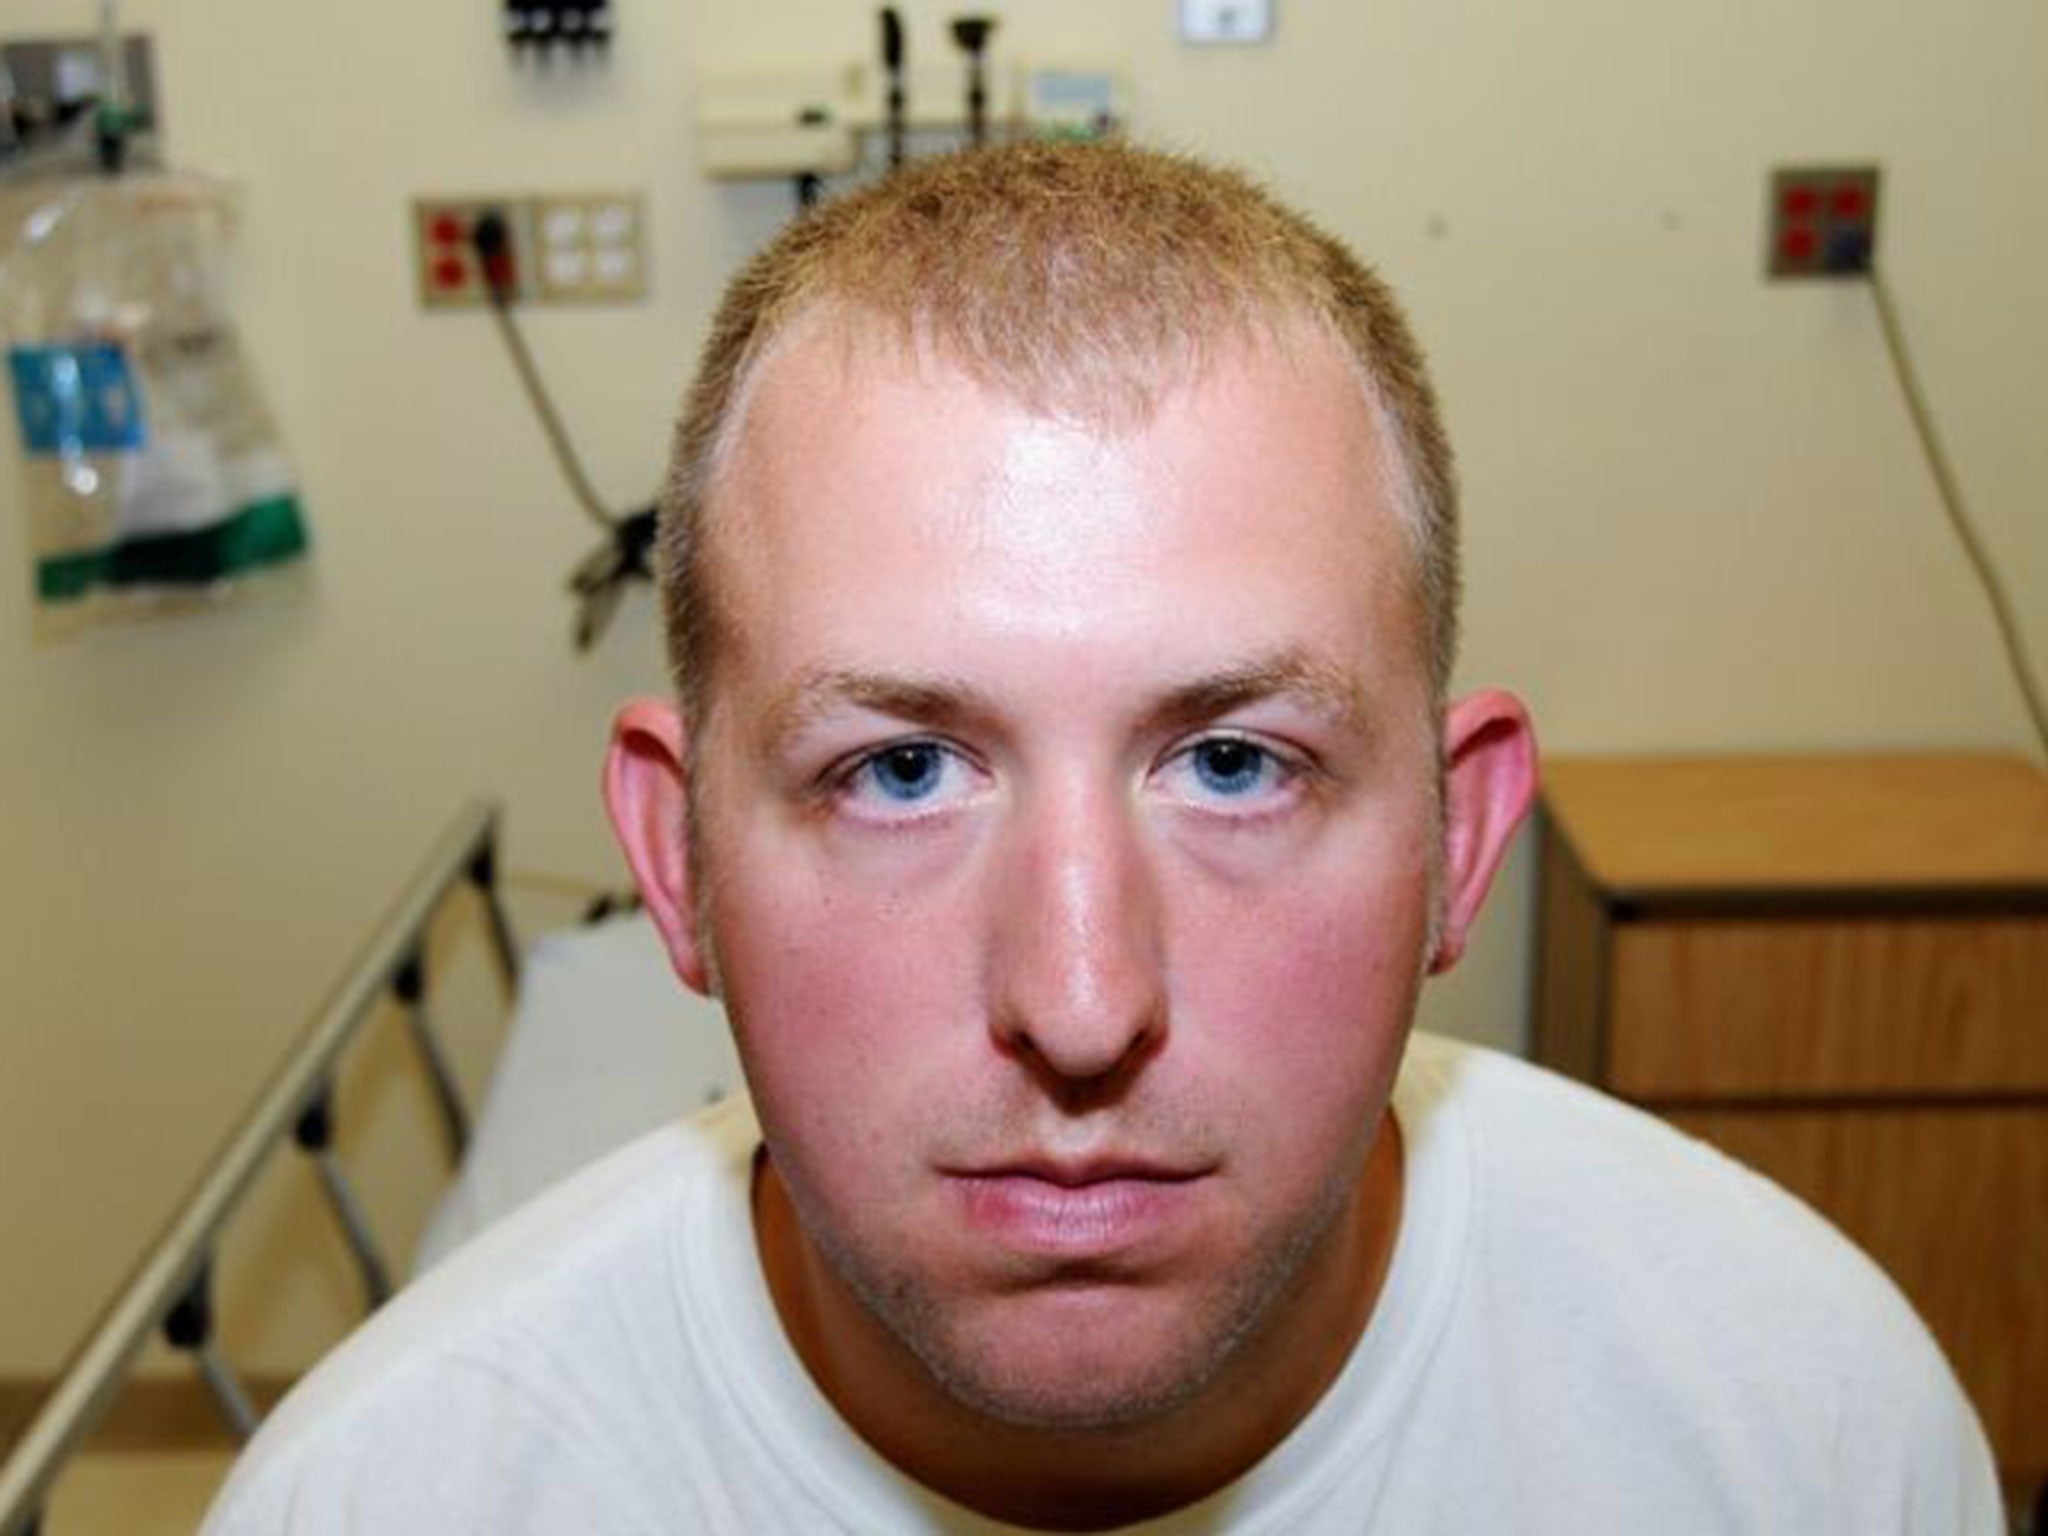 Darren Wilson during his medical examination after he fatally shot Michael Brown in Ferguson, Missouri